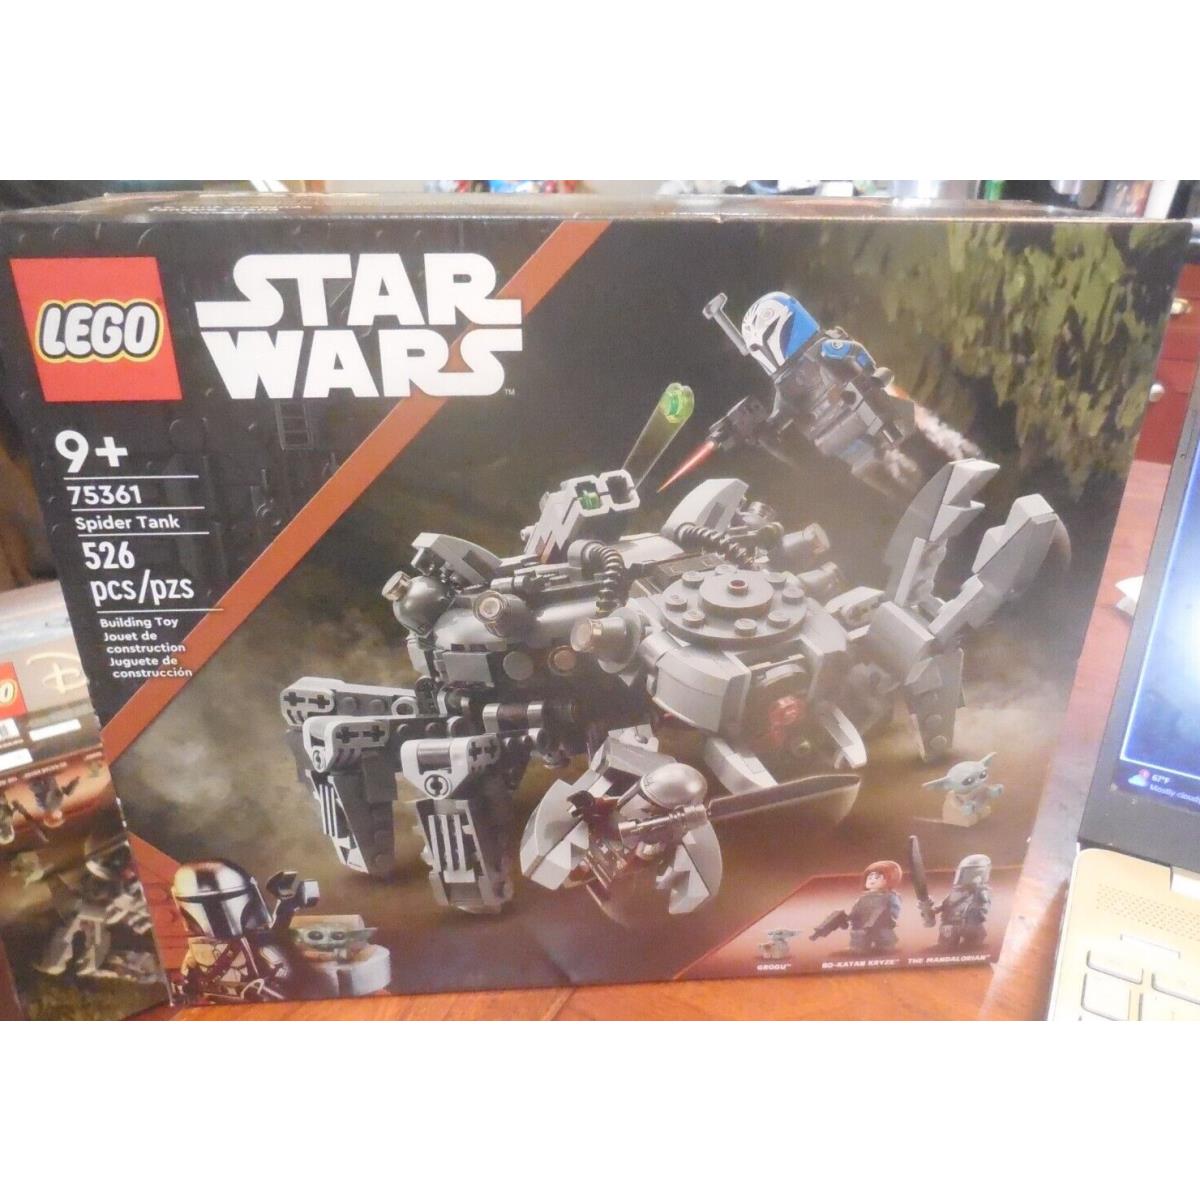 Lego Disney Star Wars The Mandalorian 75361 Spider Tank